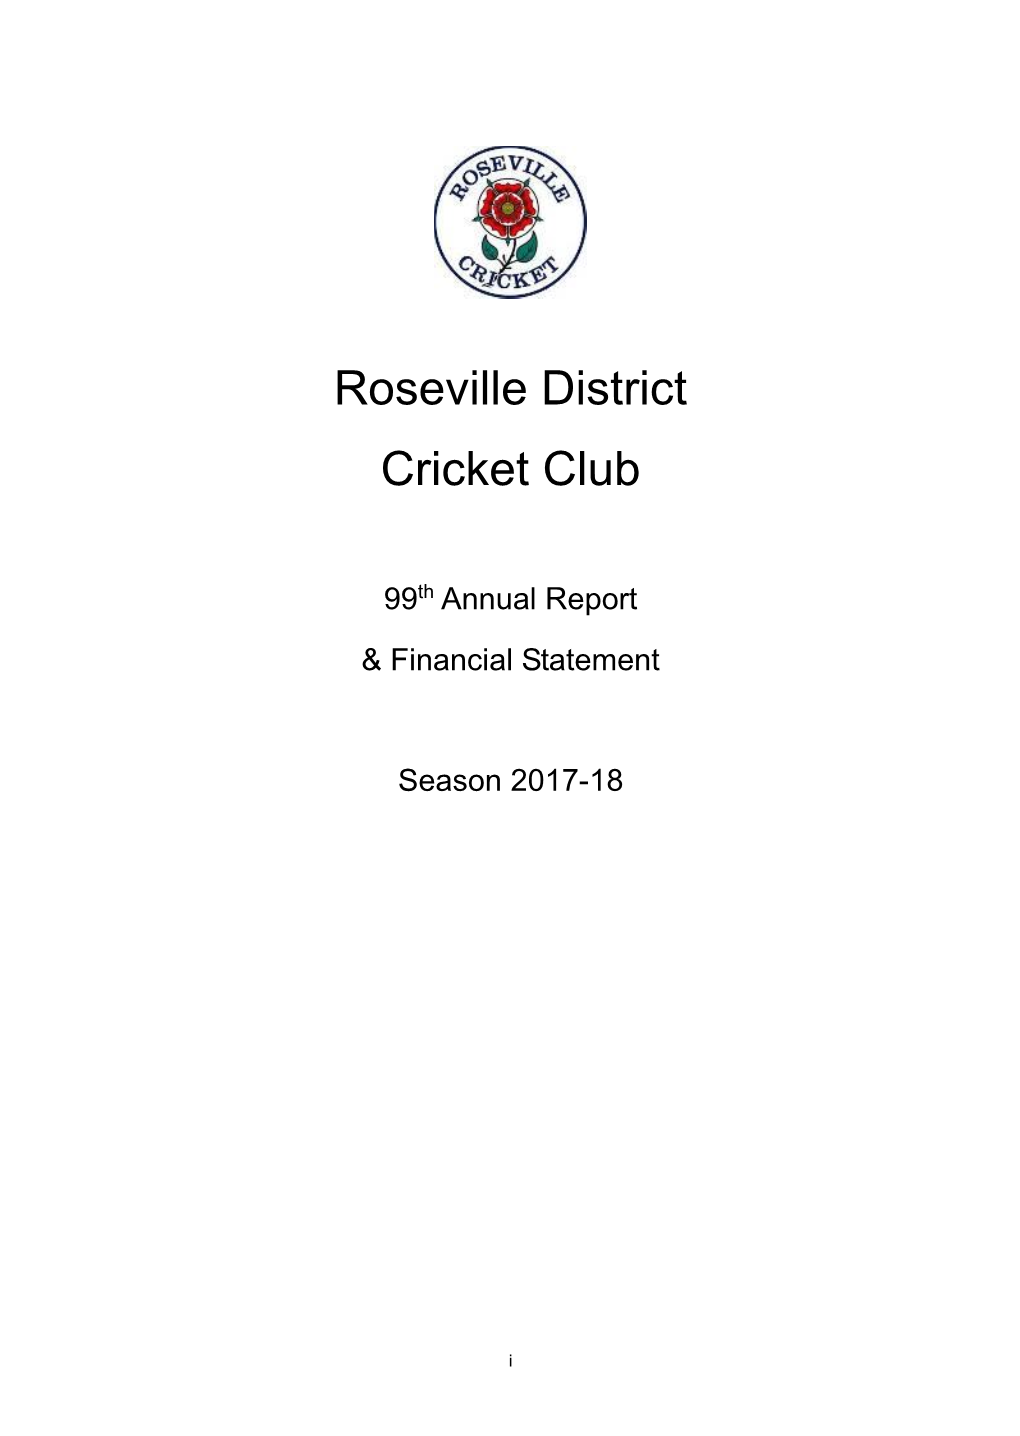 RDCC Annual Report 2007/8